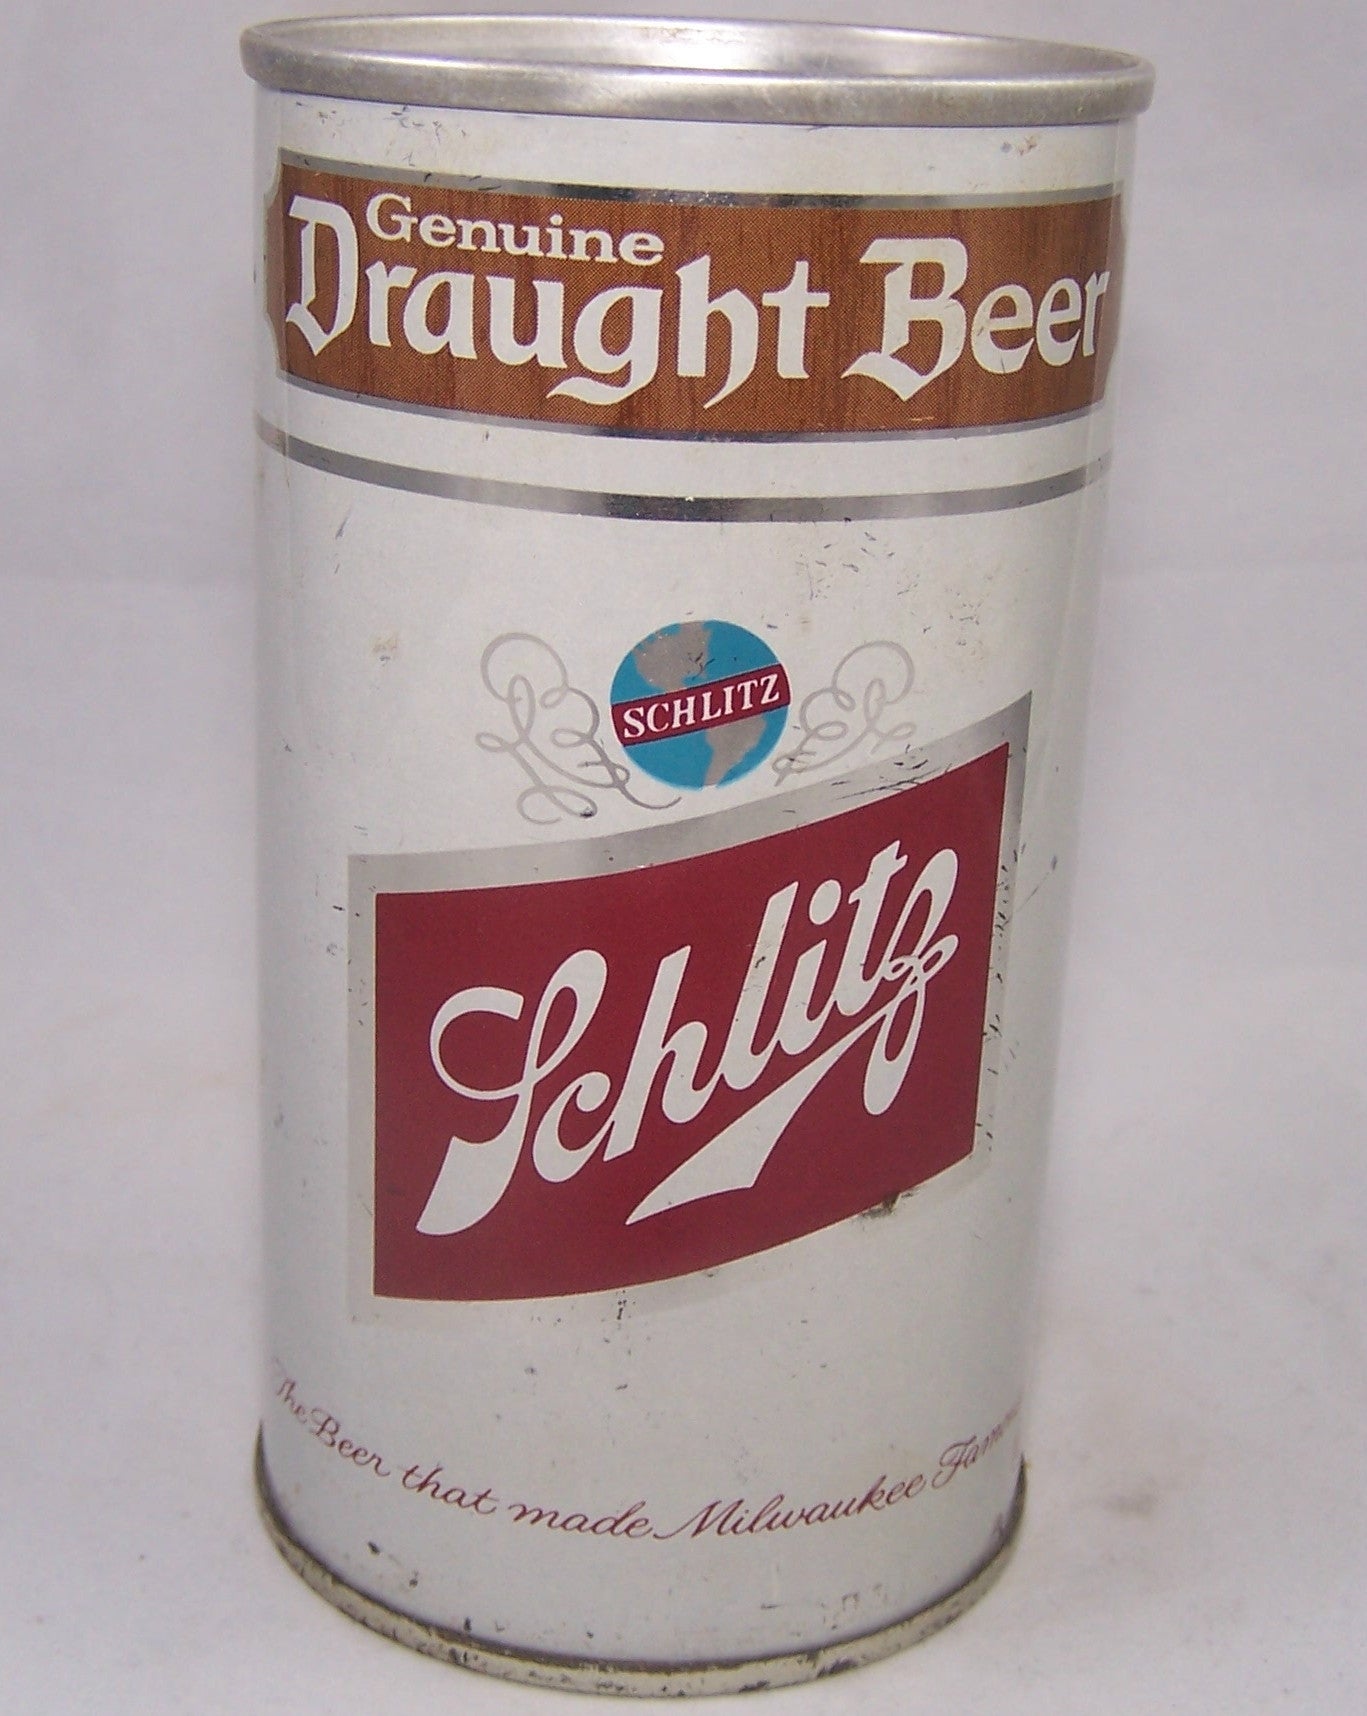 Schlitz Genuine Draught Beer, USBC II 121-04, Grade 1 or better. Sold on 07/22/16